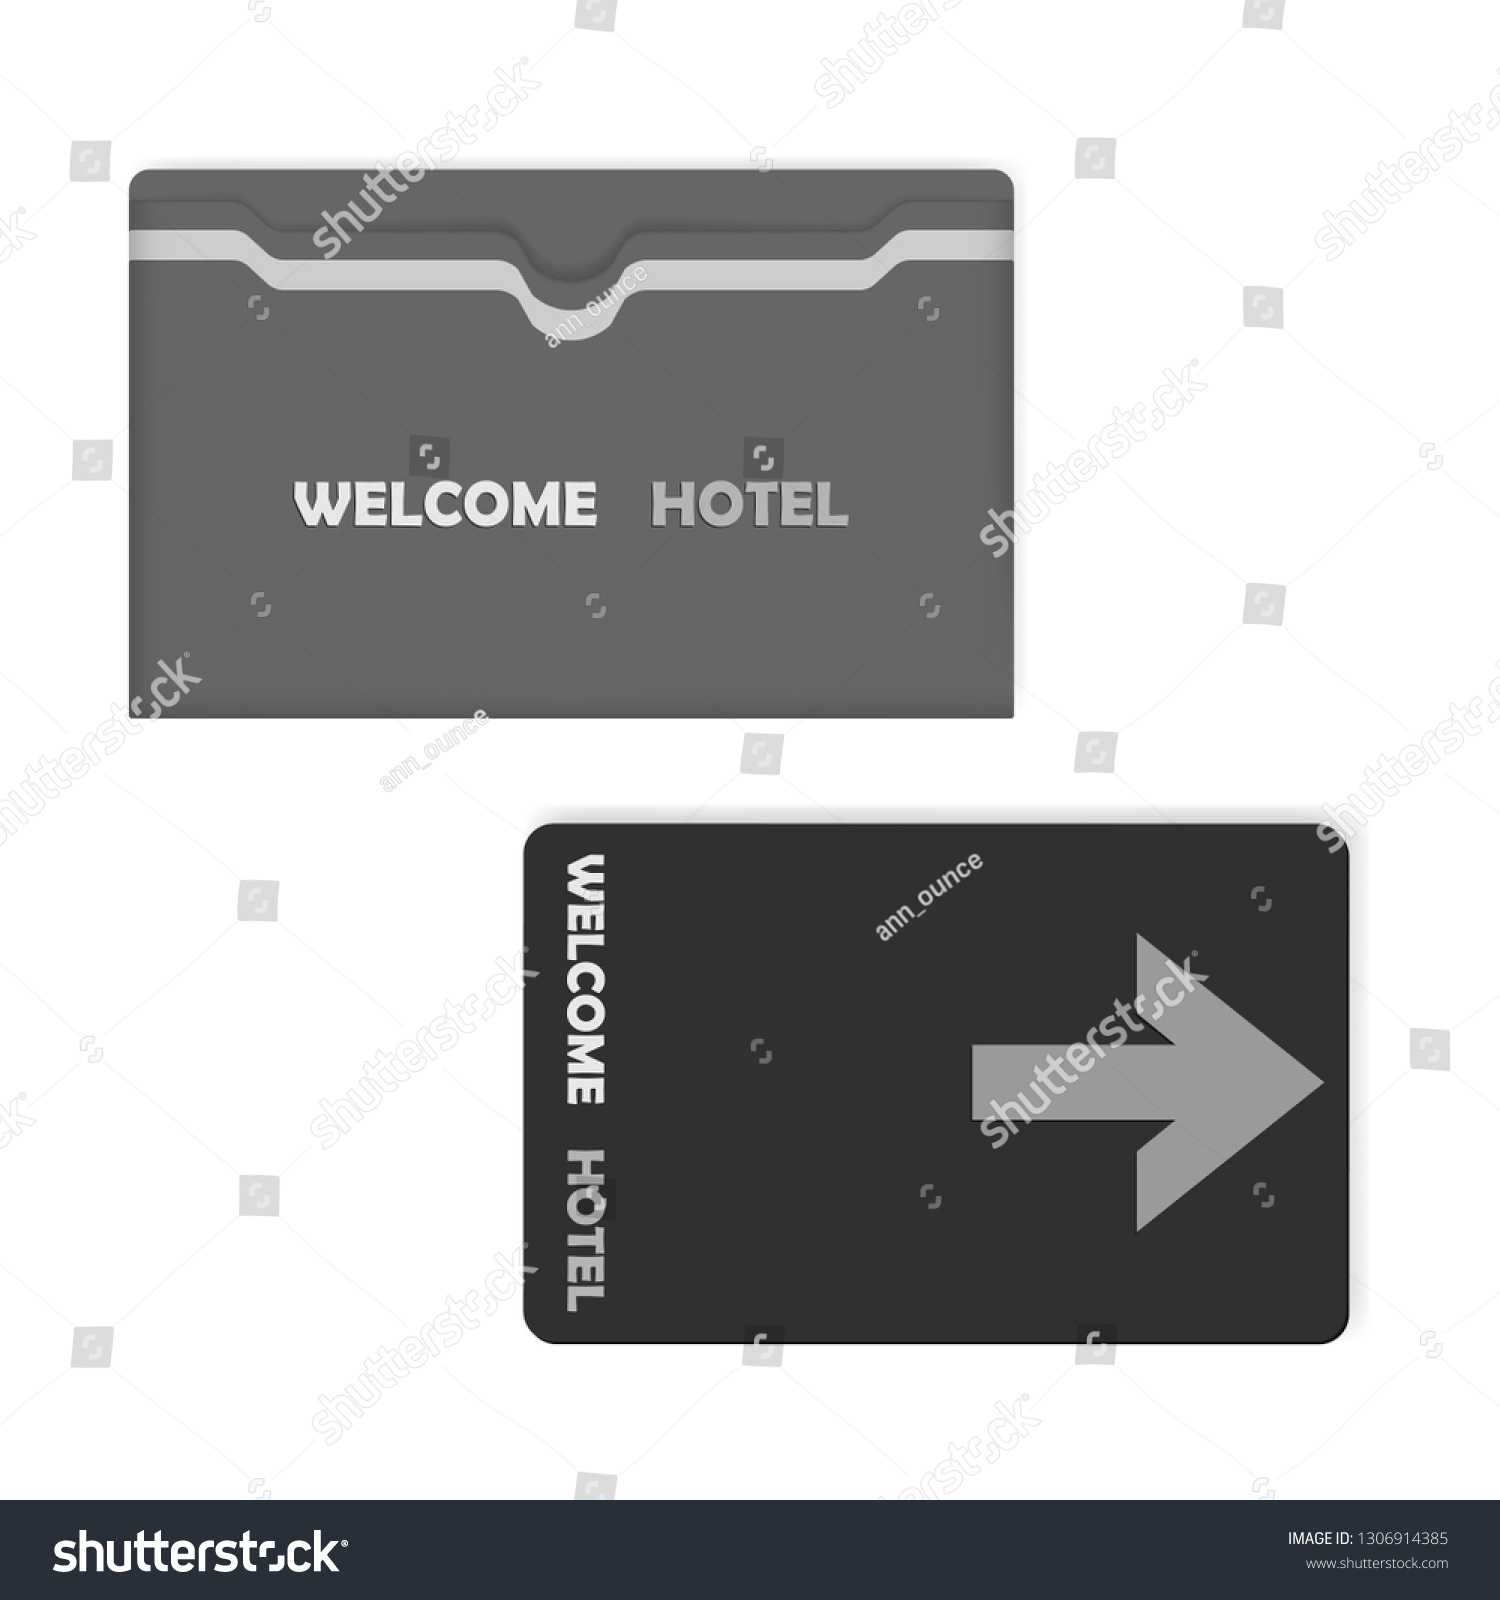 Стоковая Векторная Графика «Hotel Key Card Keycard Sleeve With Regard To Hotel Key Card Template